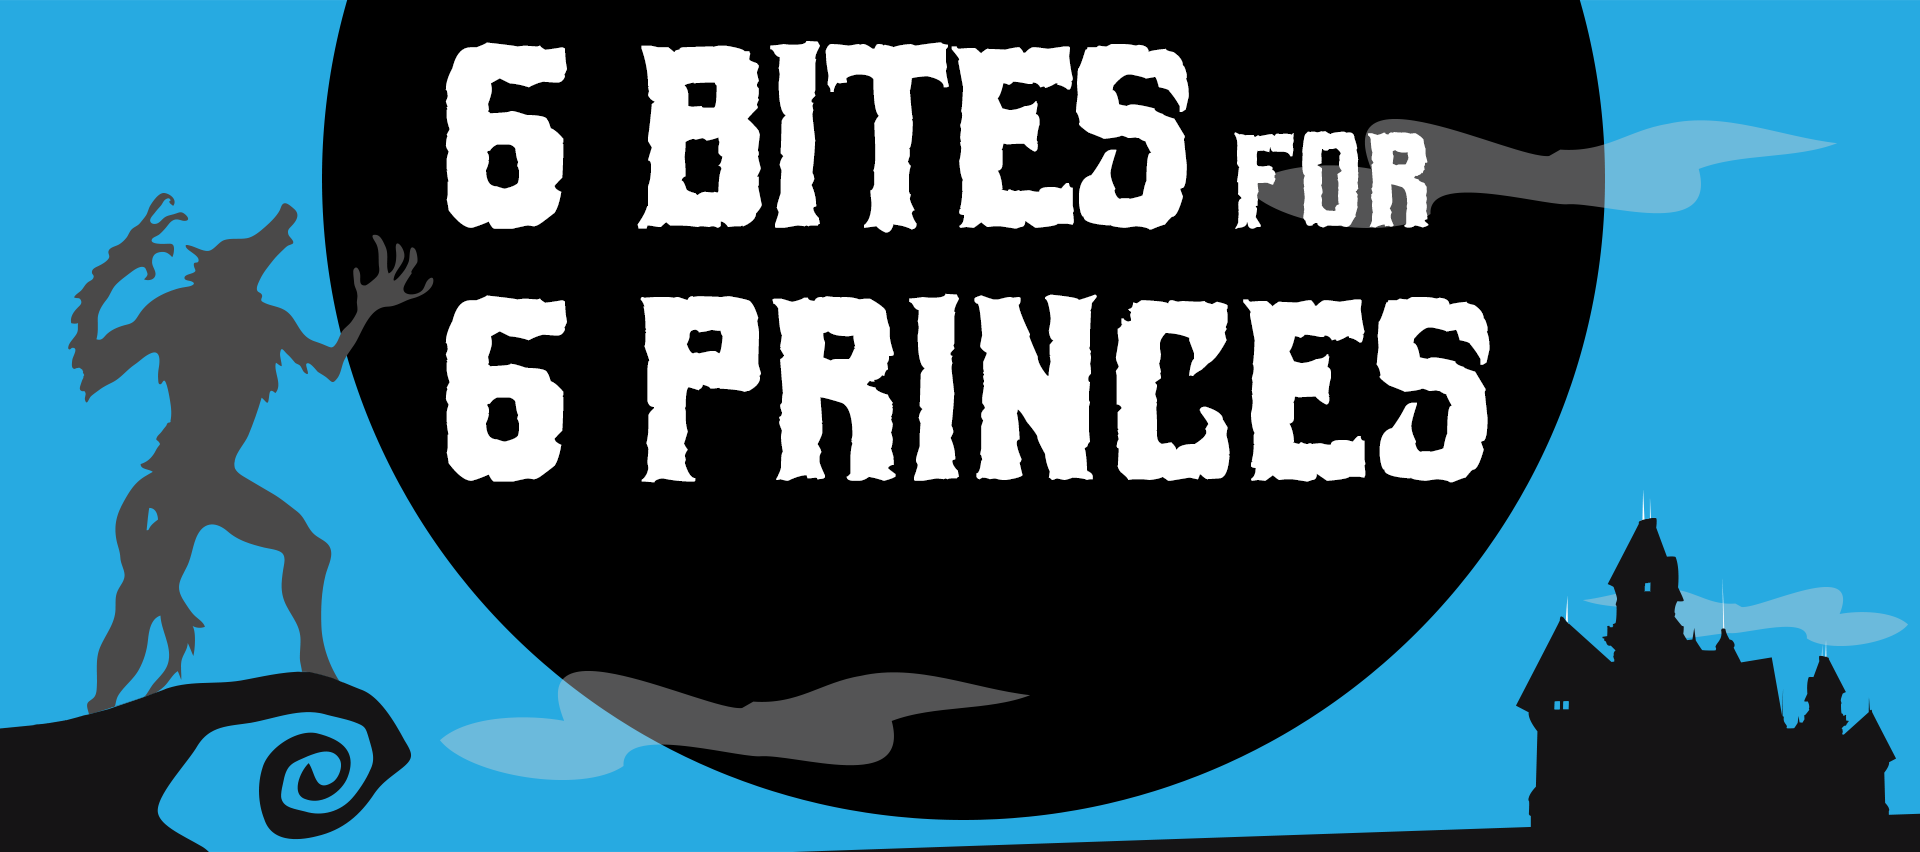 6 Bites for 6 Princes